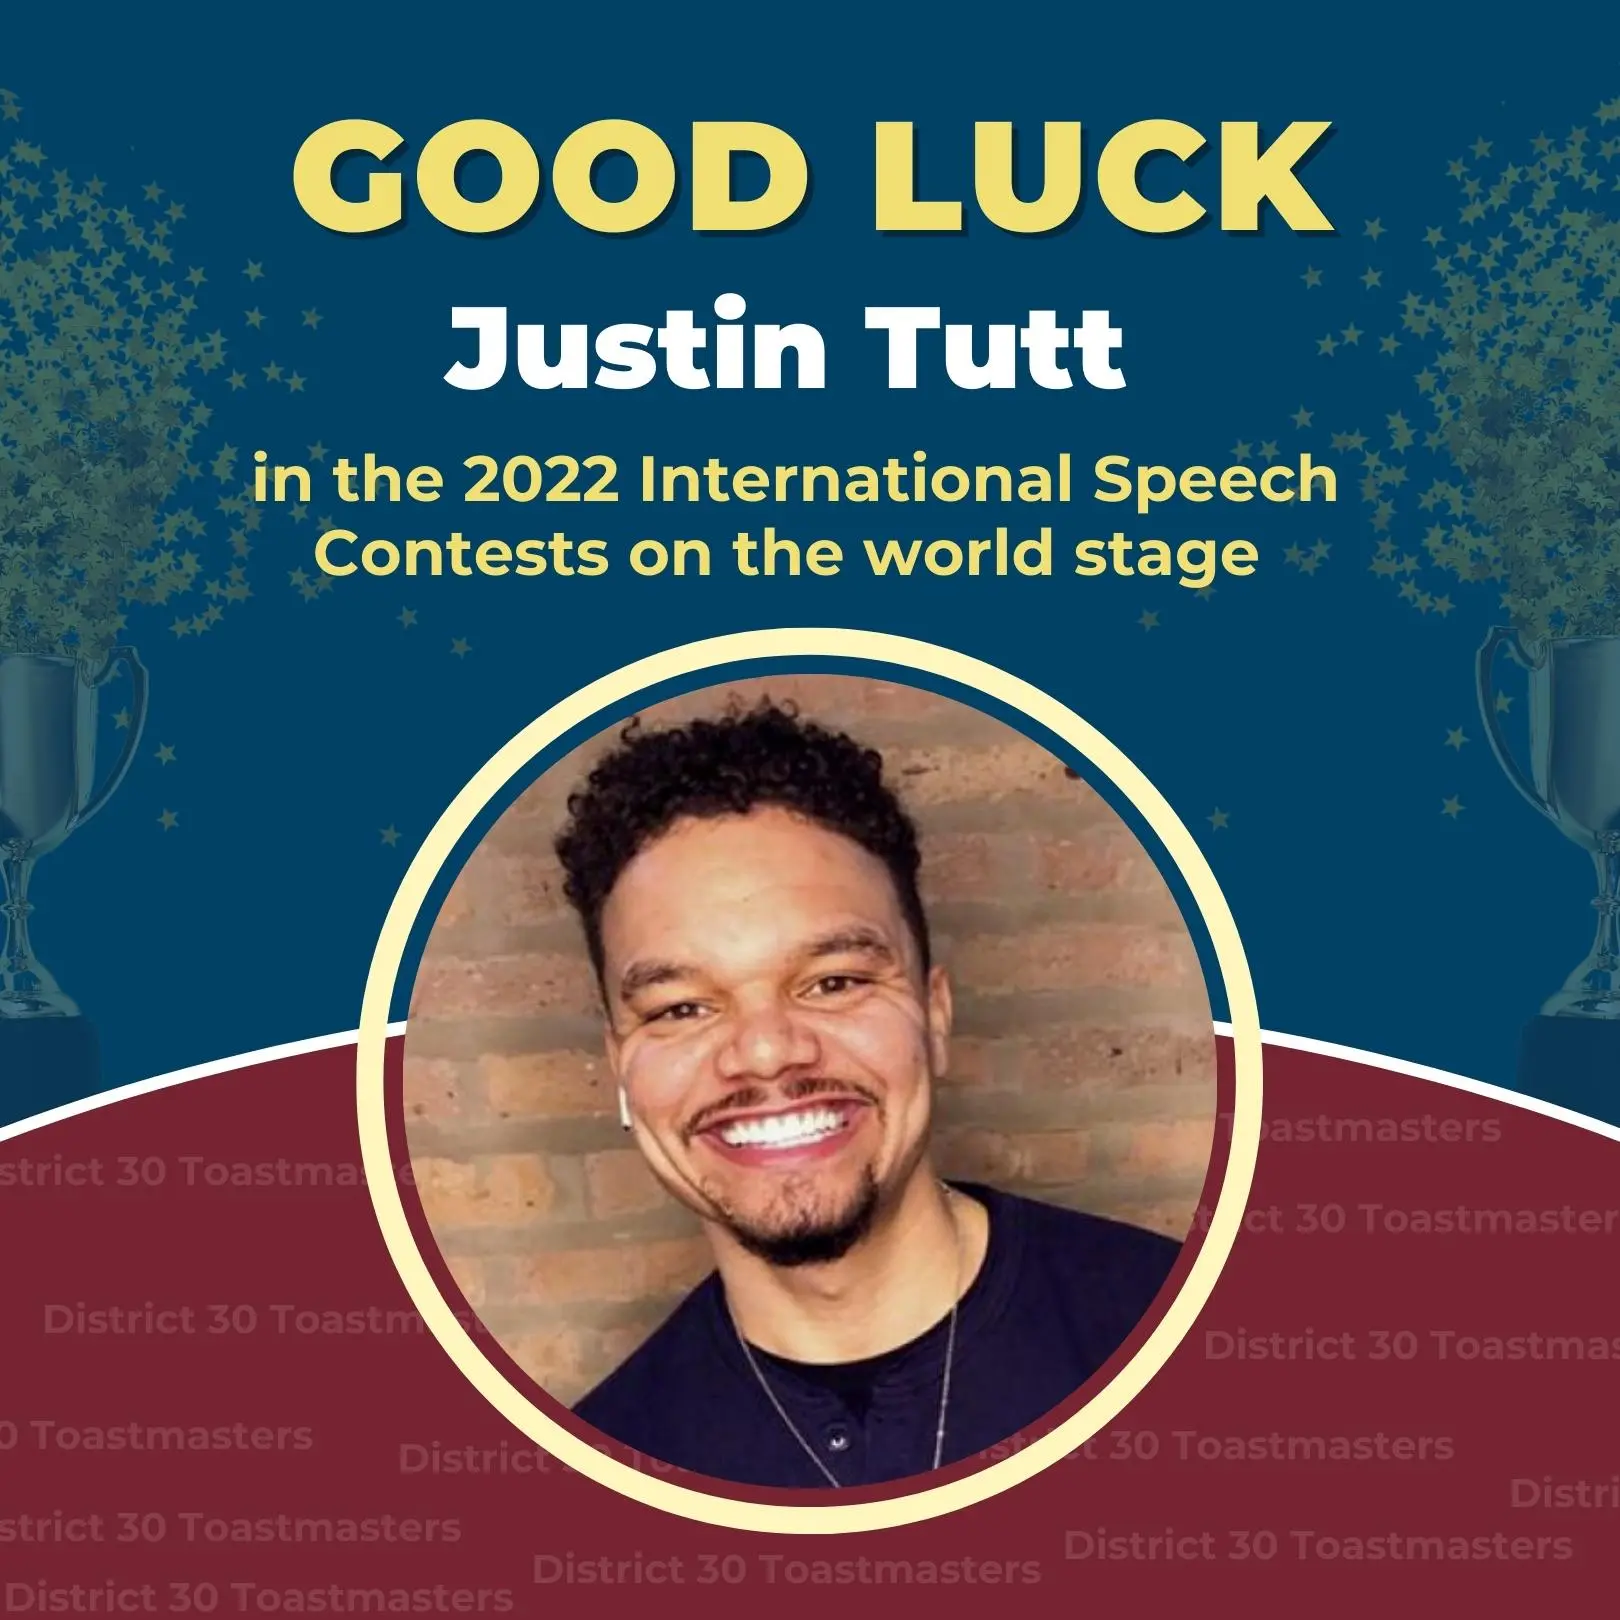 Chicago Resident Advances in World’s Largest Speech Contest — Justin Tutt